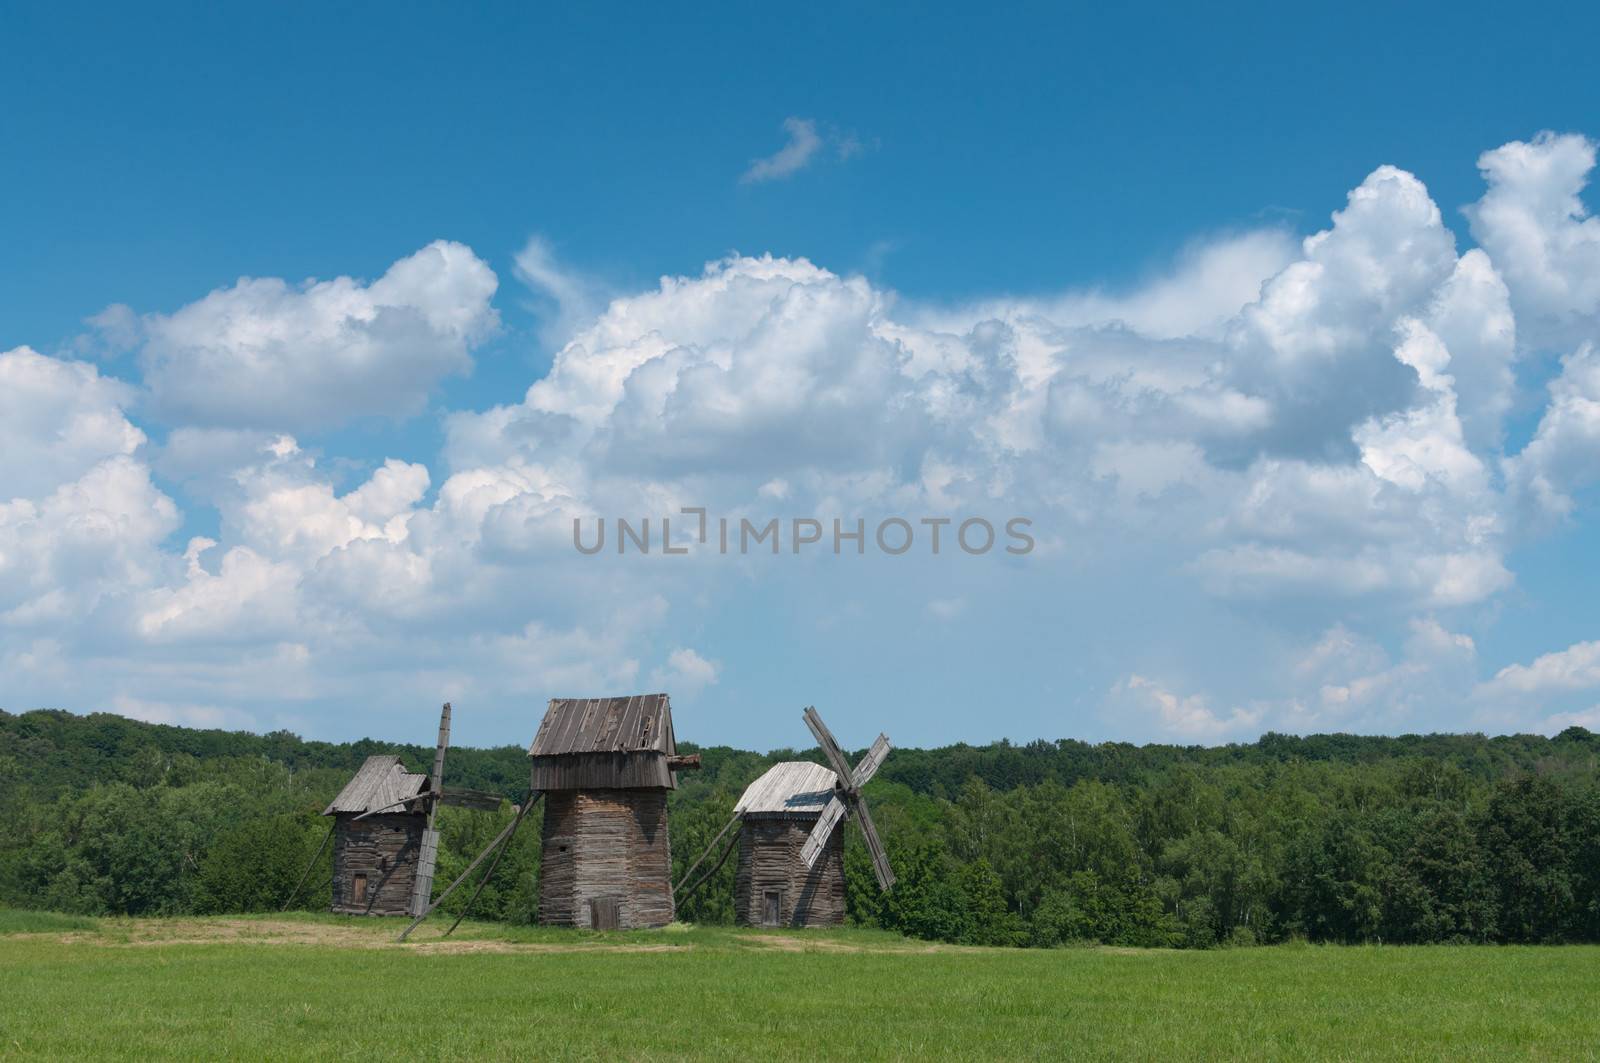 Three old wooden windmills on the field.